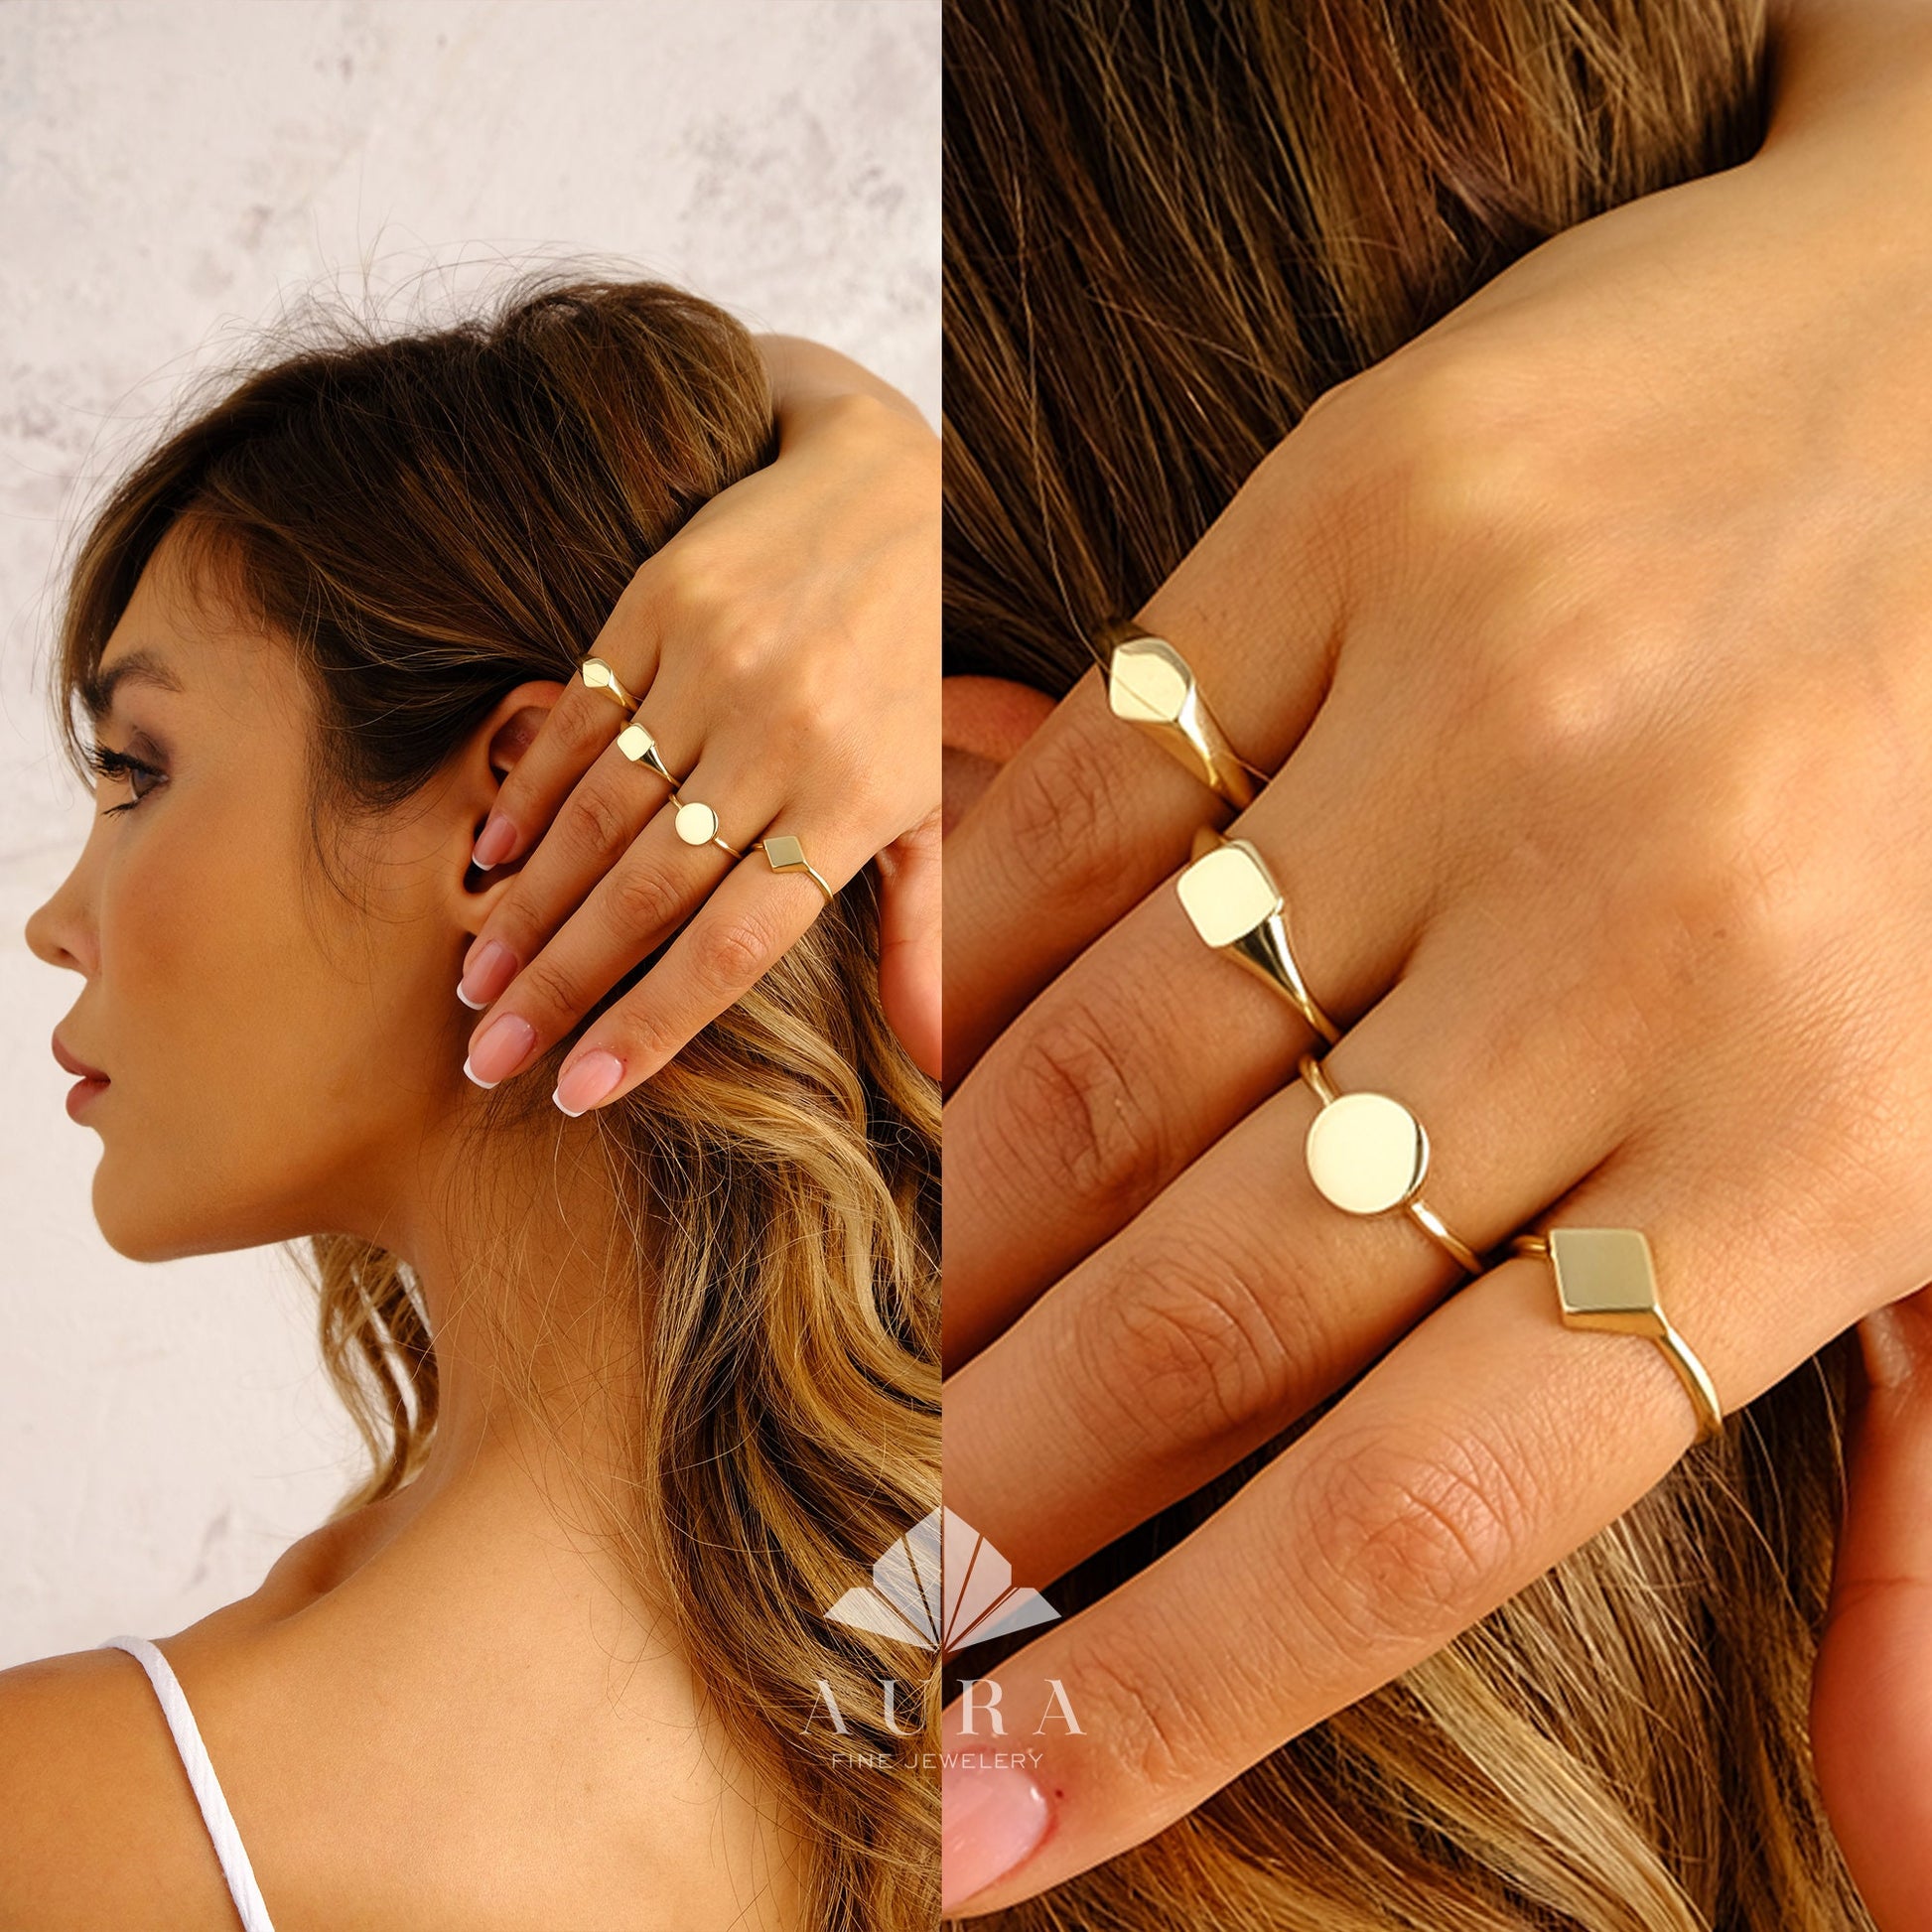 14K Gold Personalized Signet Ring, Custom Monogram Band, Initial Engraved Ring, Gold Pinky Ring, Round Rhombus Pentagon Square Signet Ring